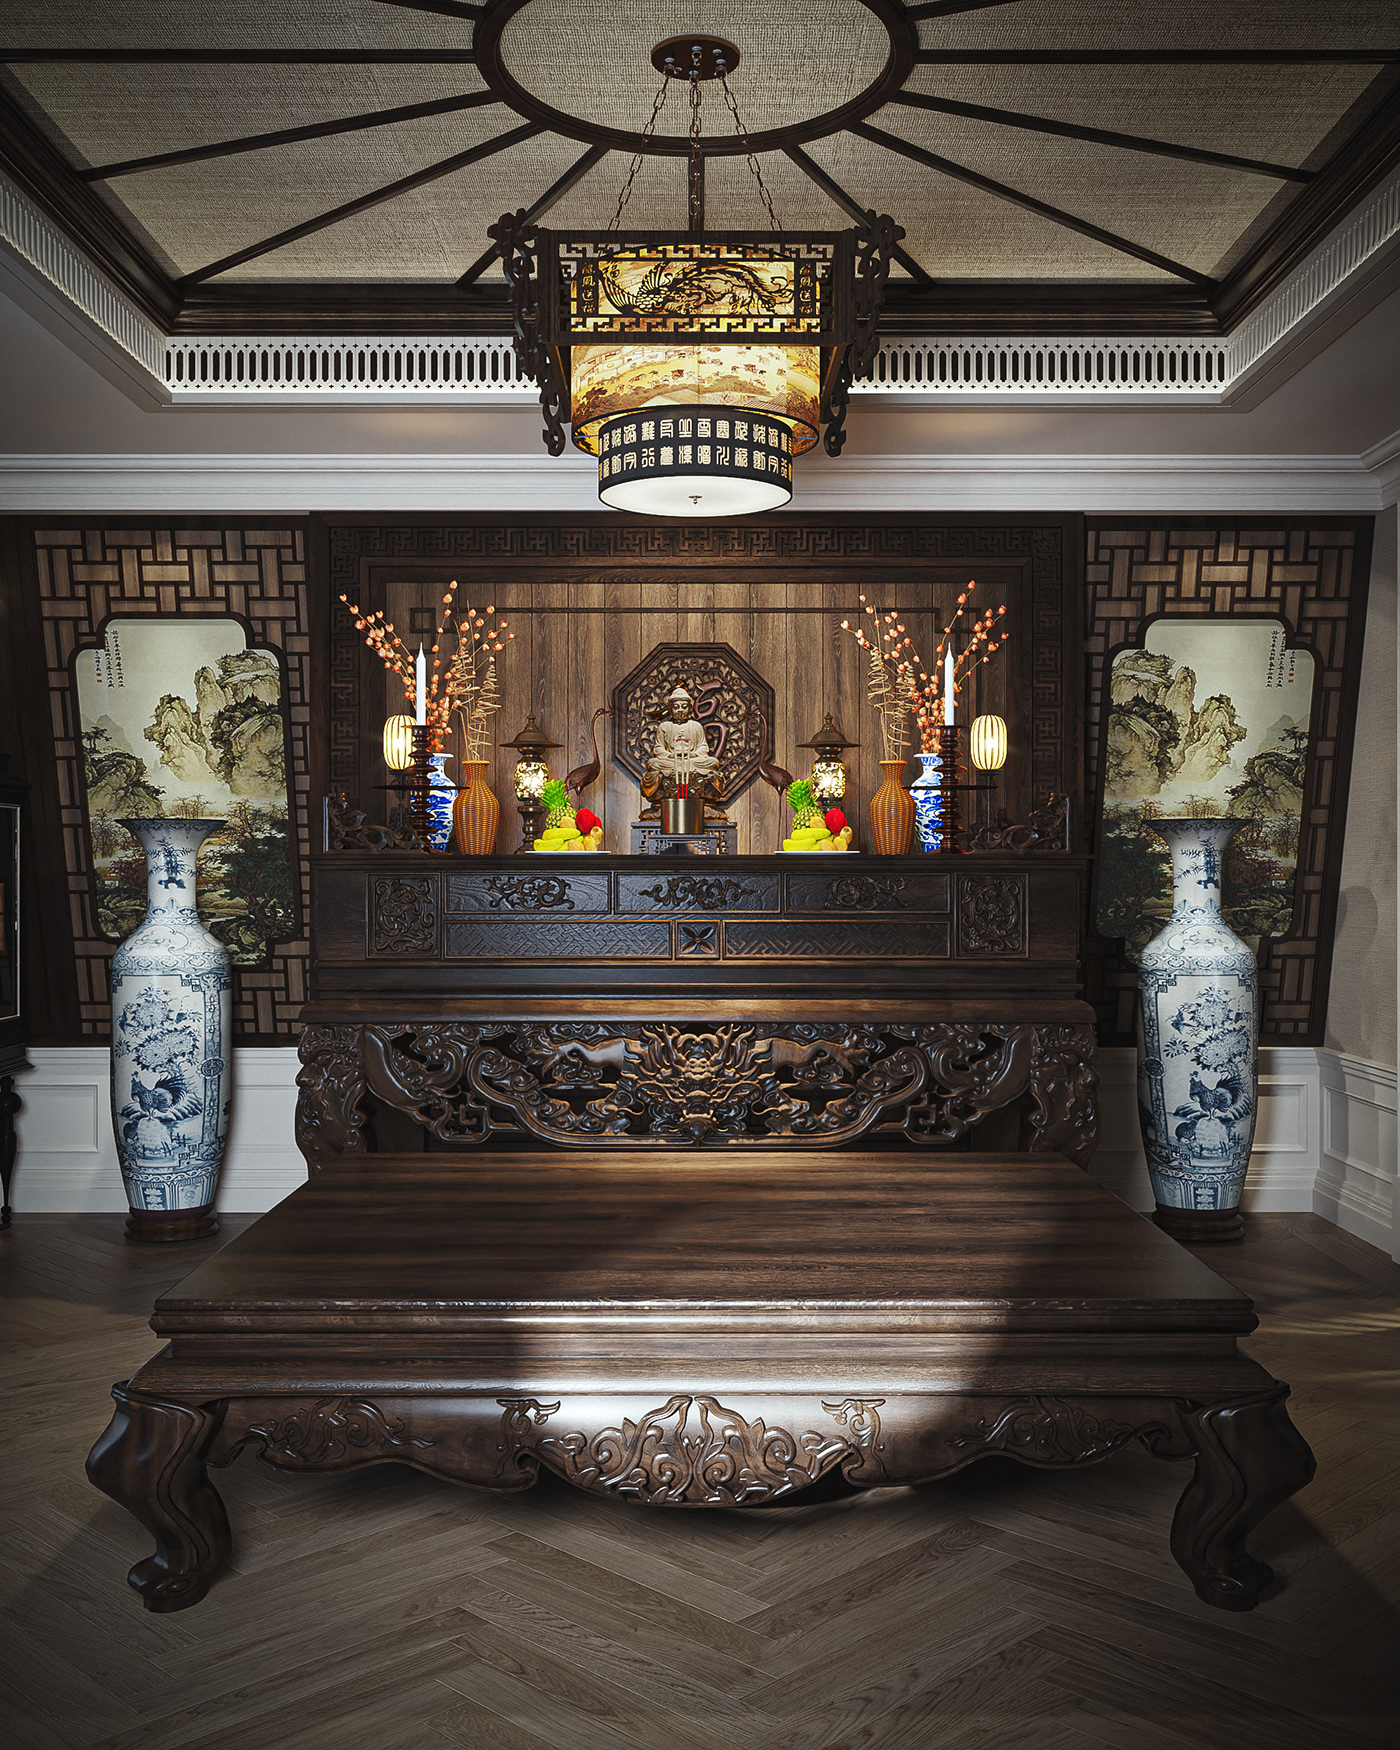 3ds max corona render  Behance indochine design vietnam IndochineStyle tabernacle room